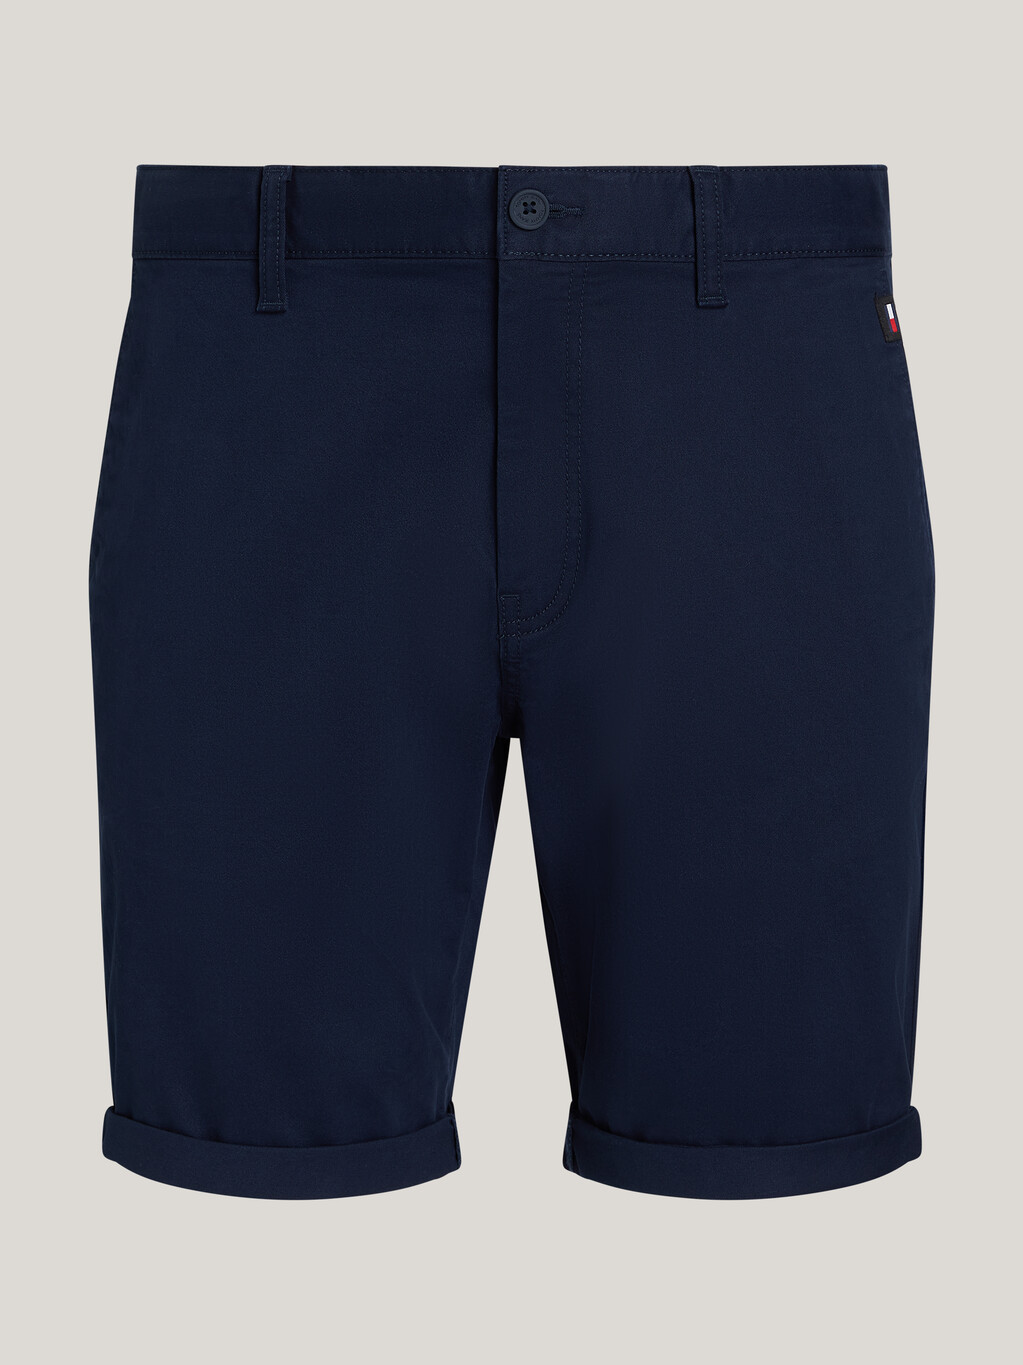 Scanton Fit Organic Cotton Shorts, Dark Night Navy, hi-res